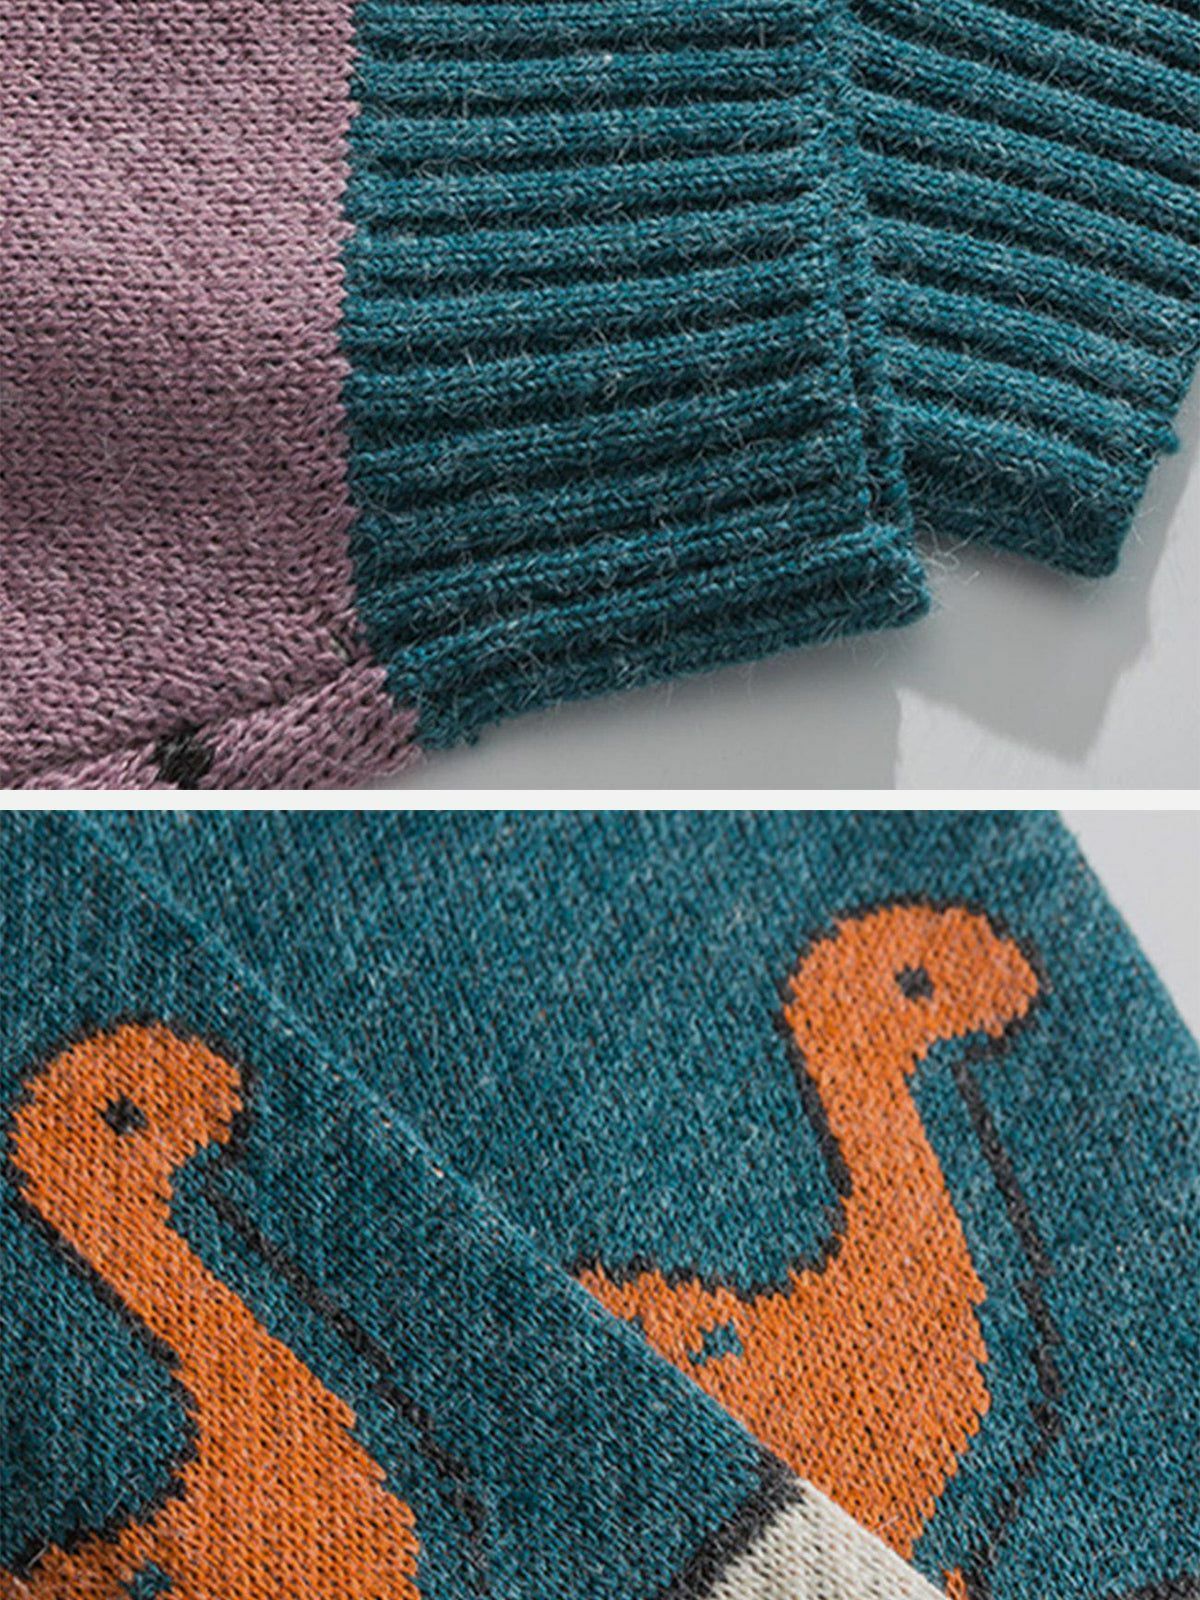 dino print knit sweater quirky & retro streetwear charm 7415